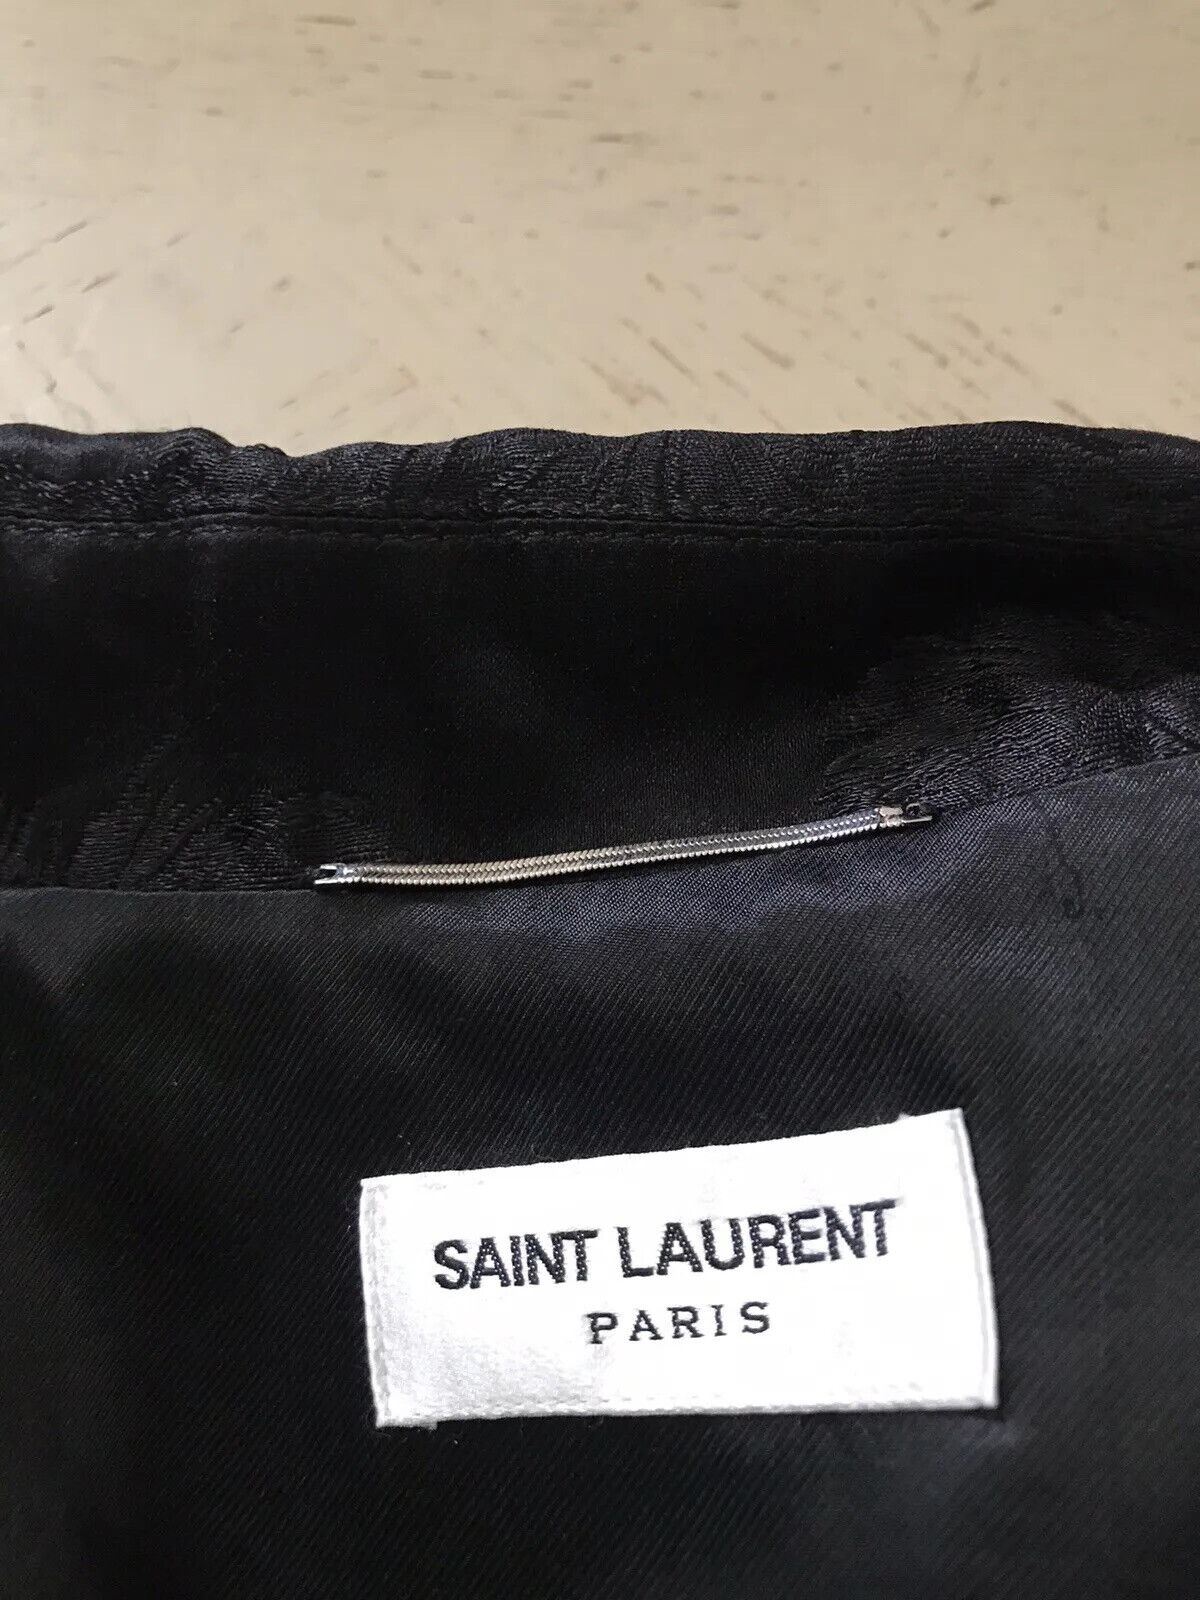 Neu $ 2690 Saint Laurent Raglanjacke mit Reißverschluss, Schwarz, 40 US (50 Eu), Italien